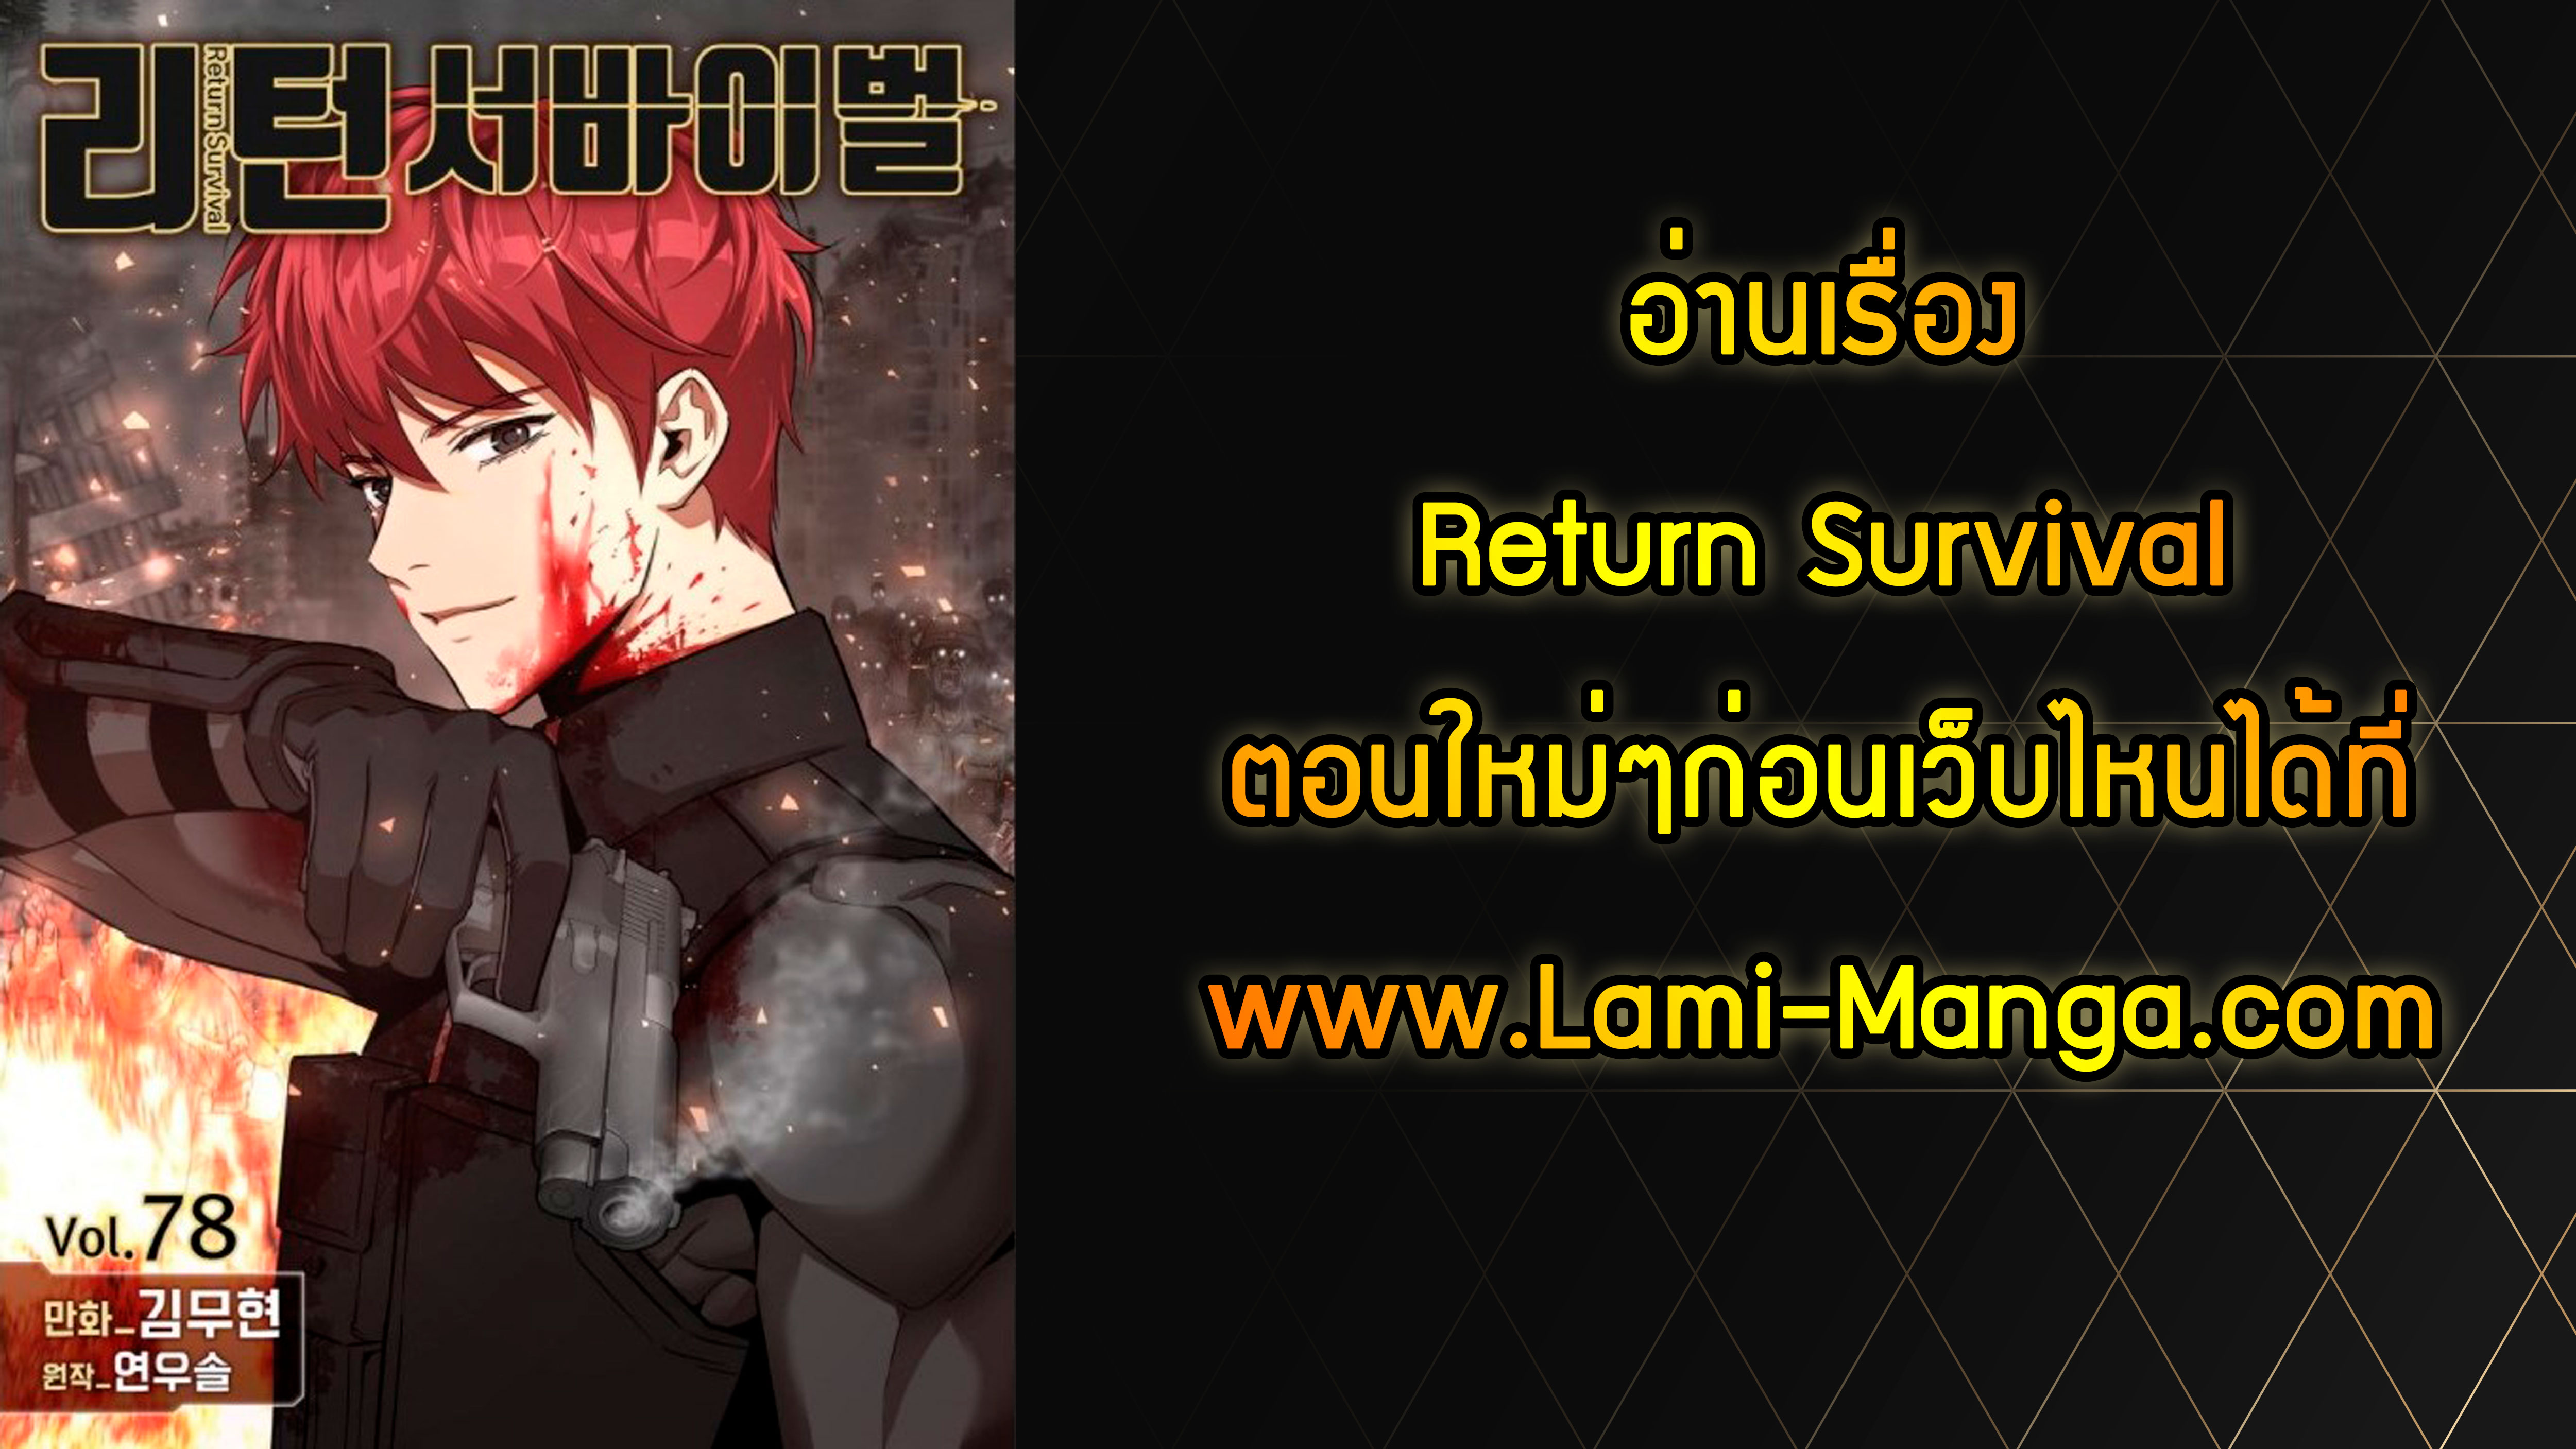 Return Survival 32 06